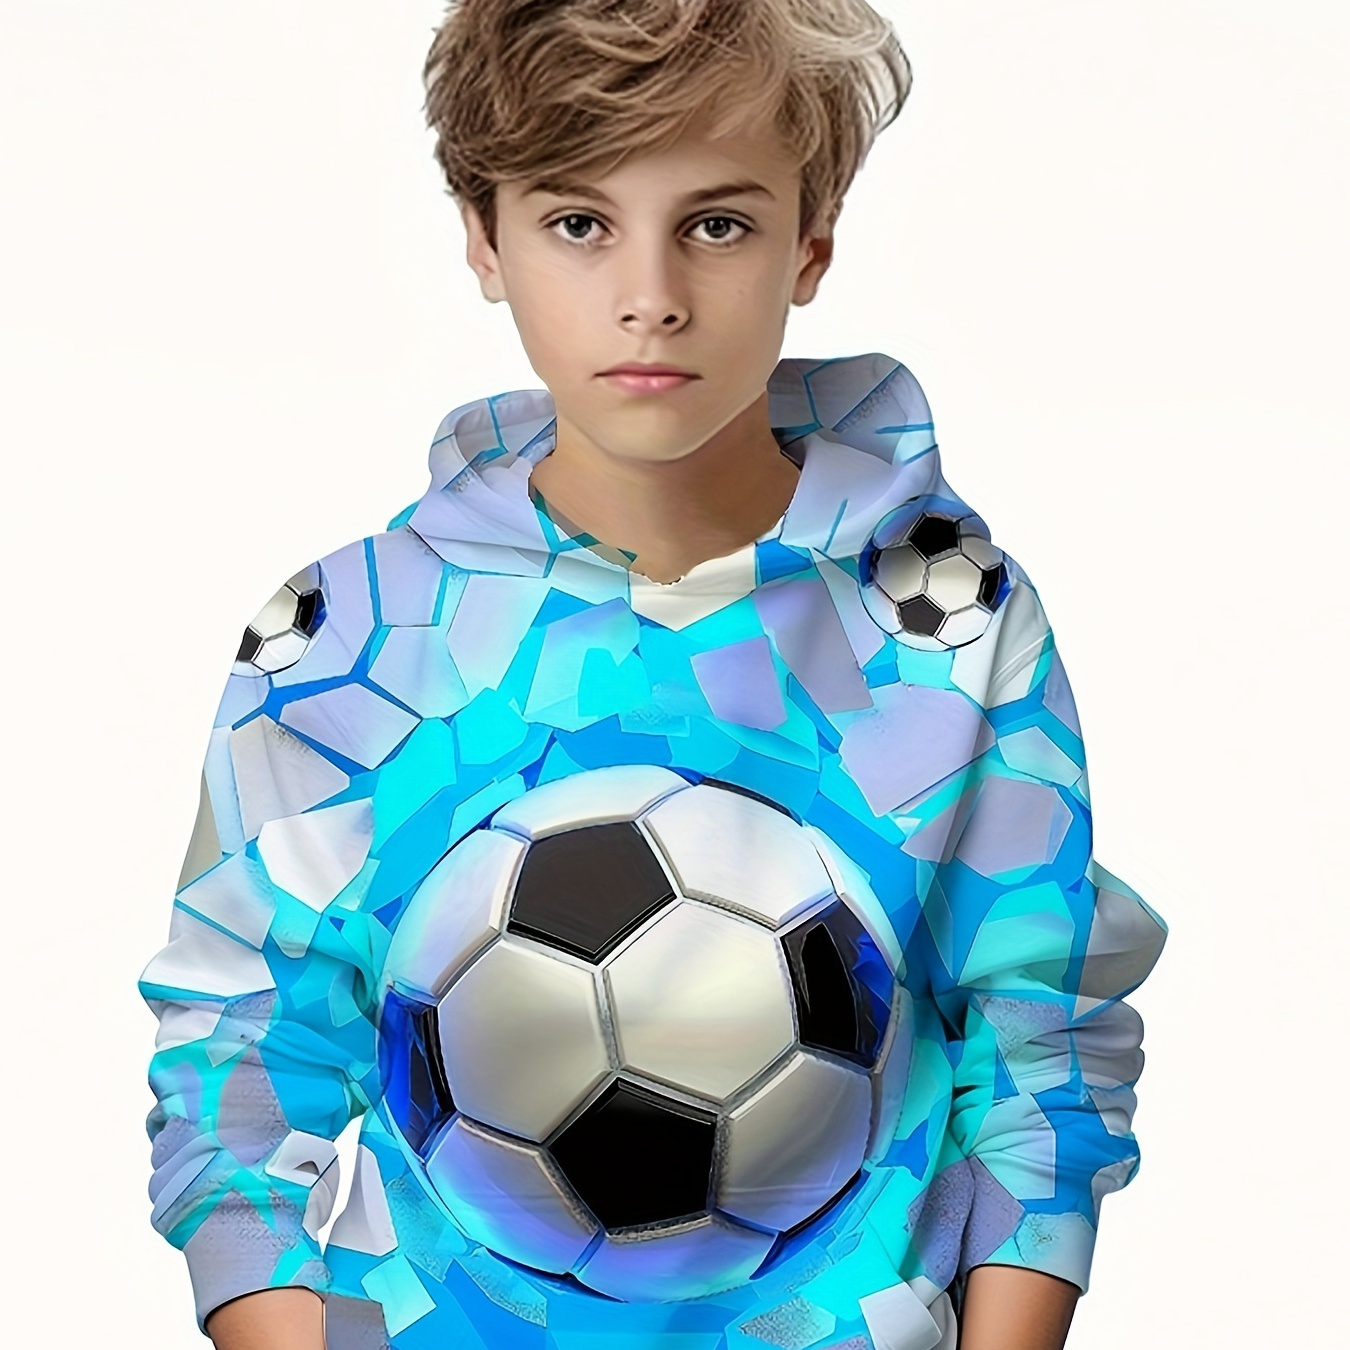 

Soccer 3d Print Boy's Trendy Hoodie, Casual Long Sleeve Hooded Sweatshirt, Fall Winter Clothing